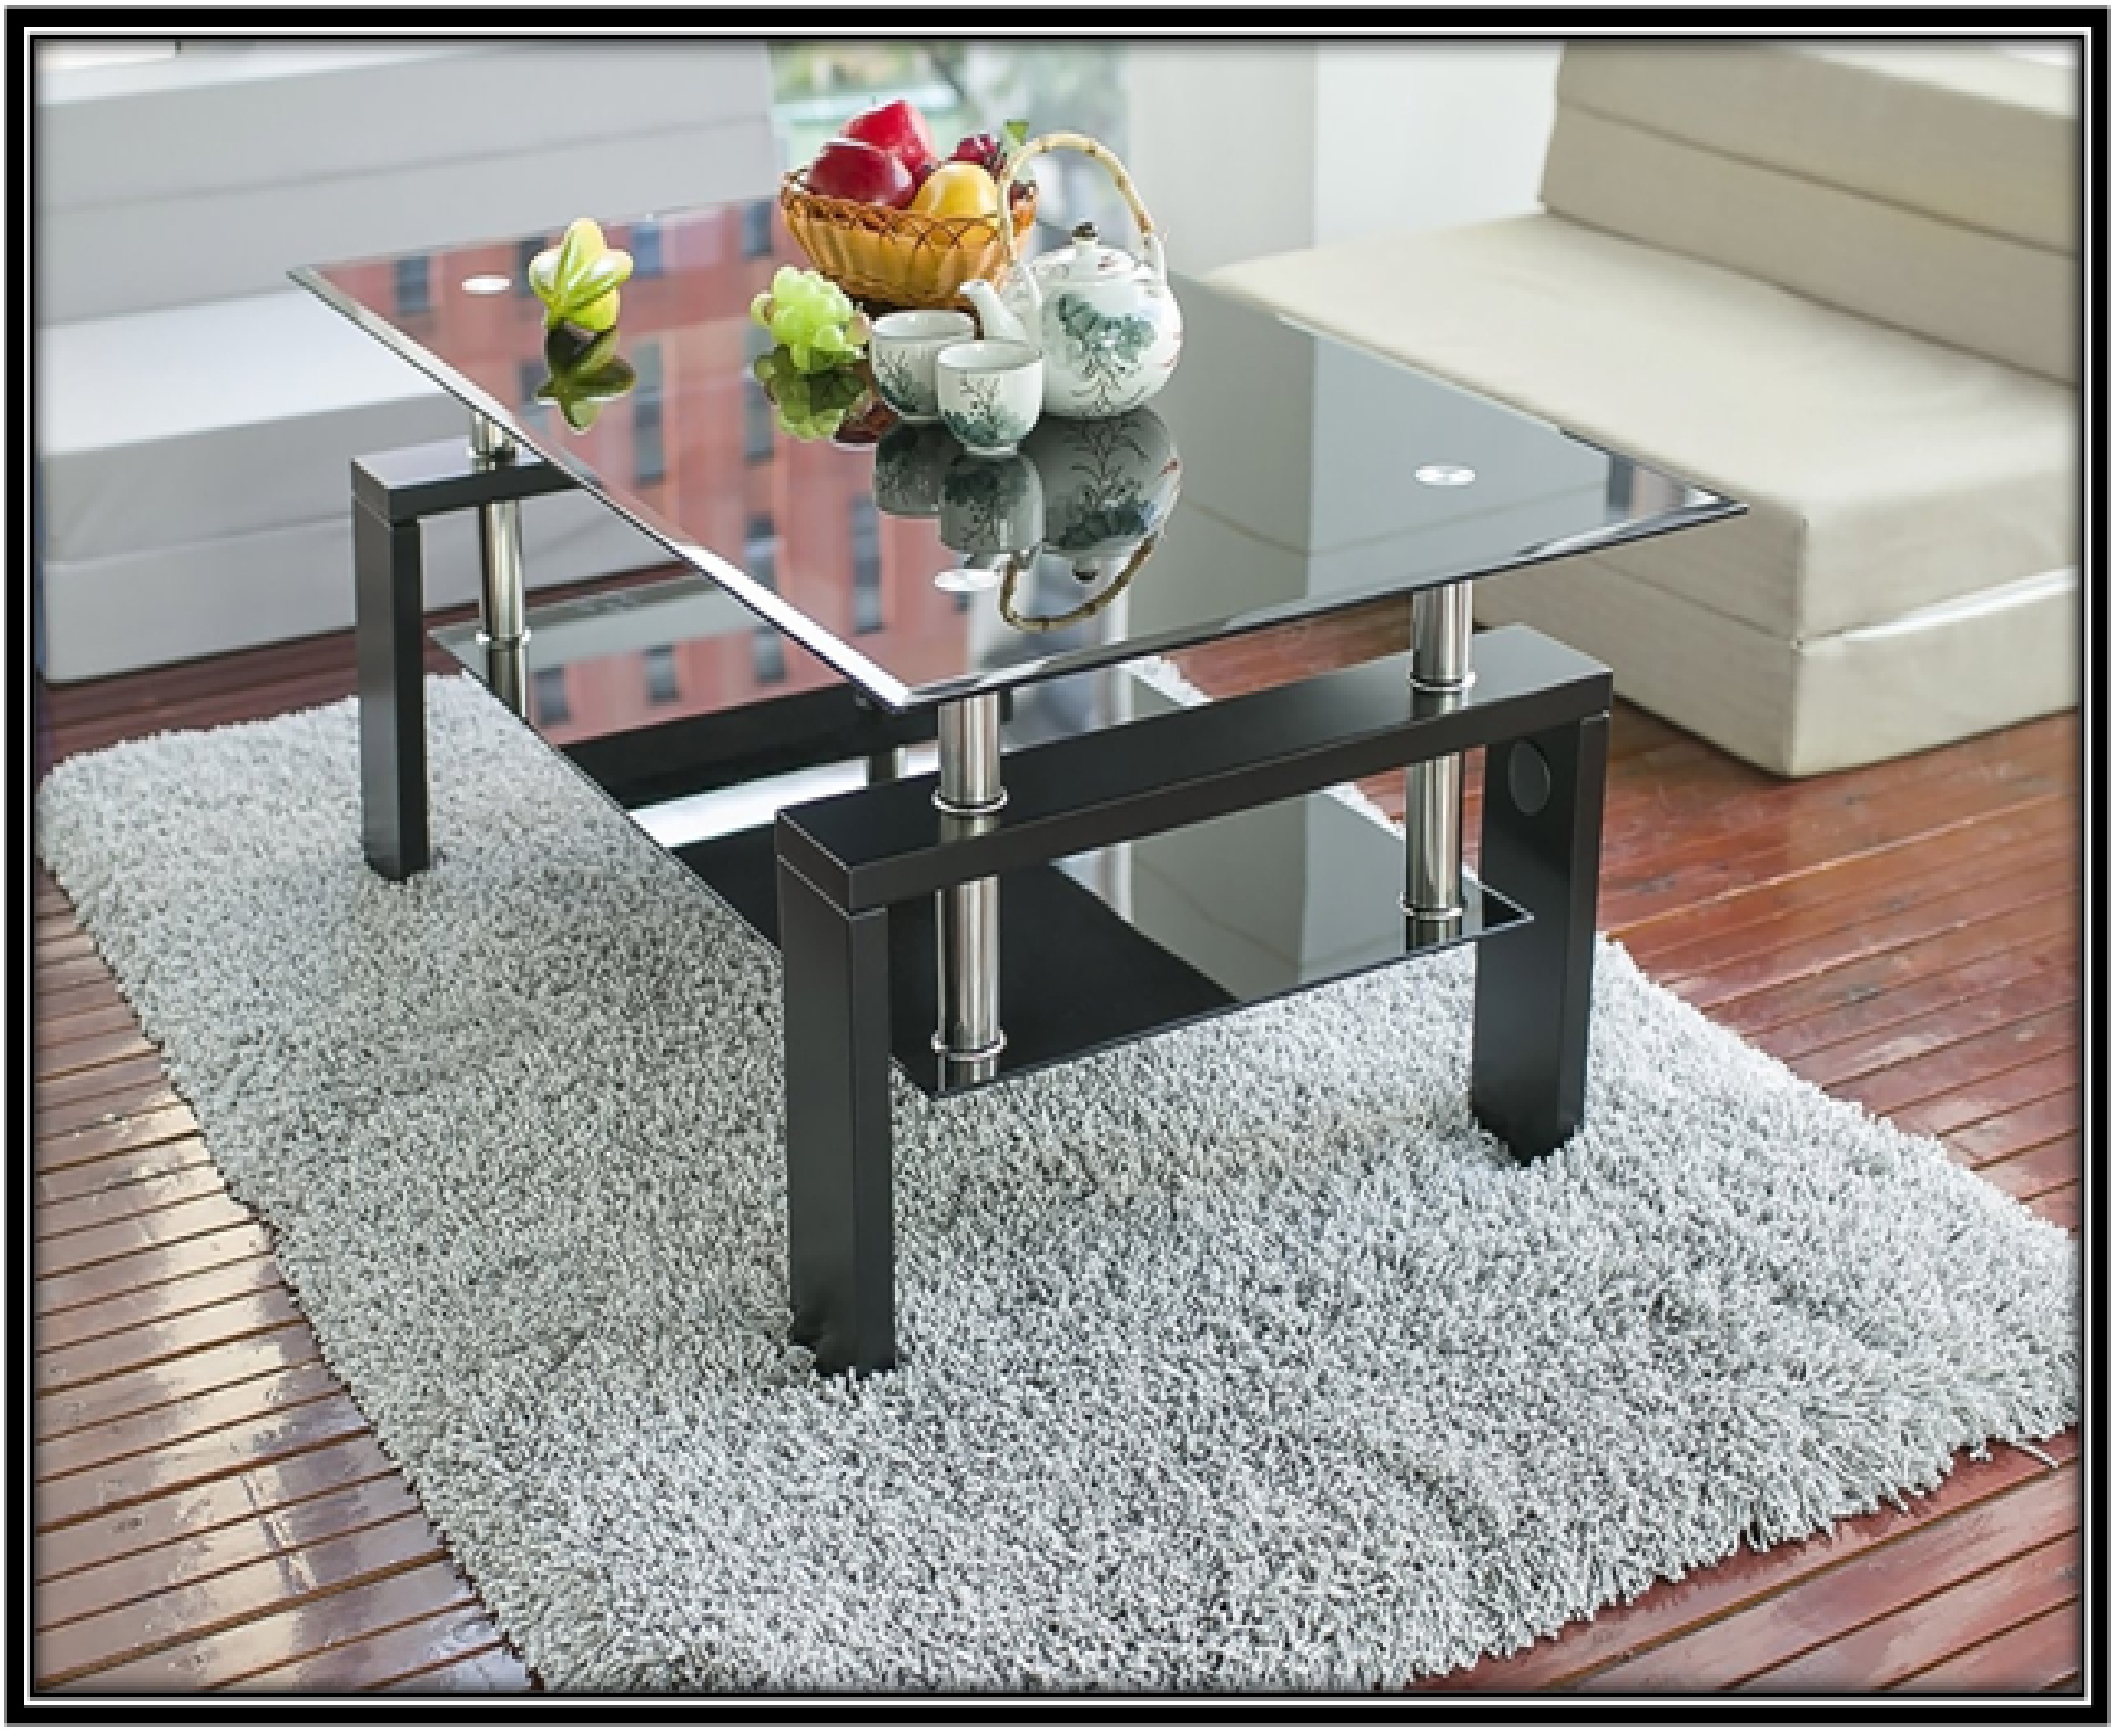 Glass top table - Home Decor Ideas